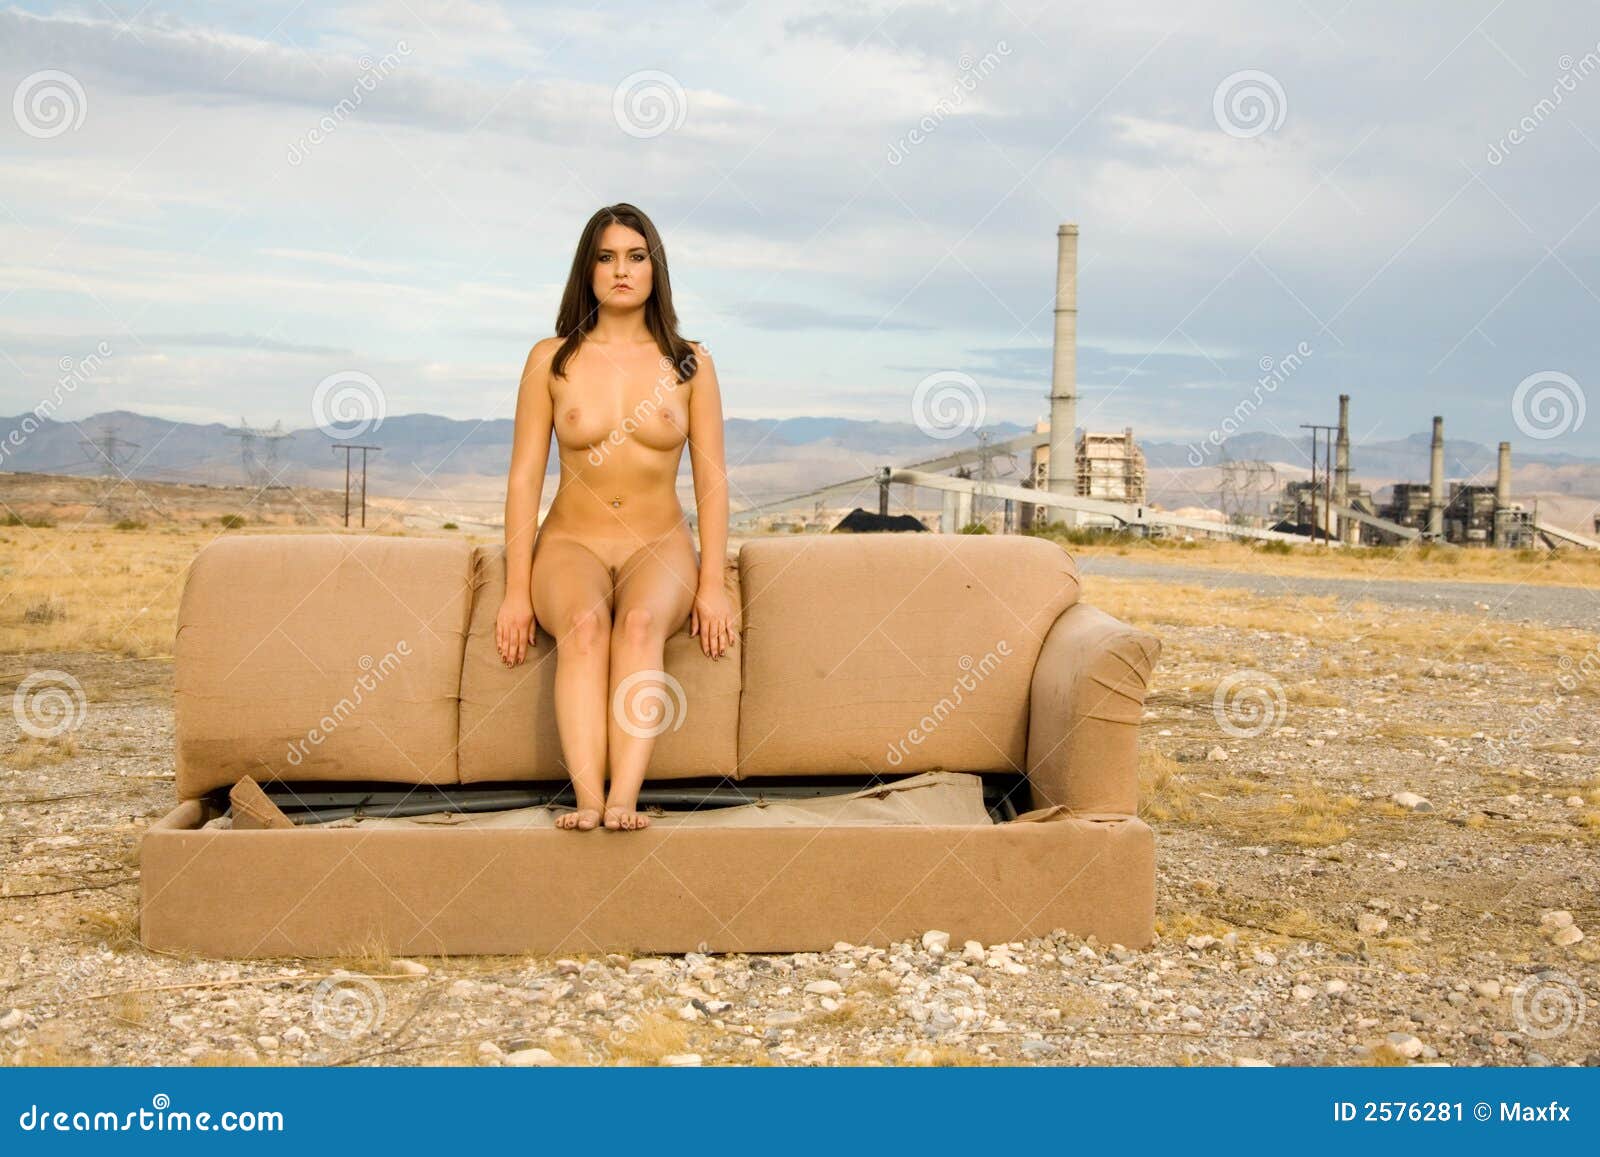 nudist in the desert hd sex photo